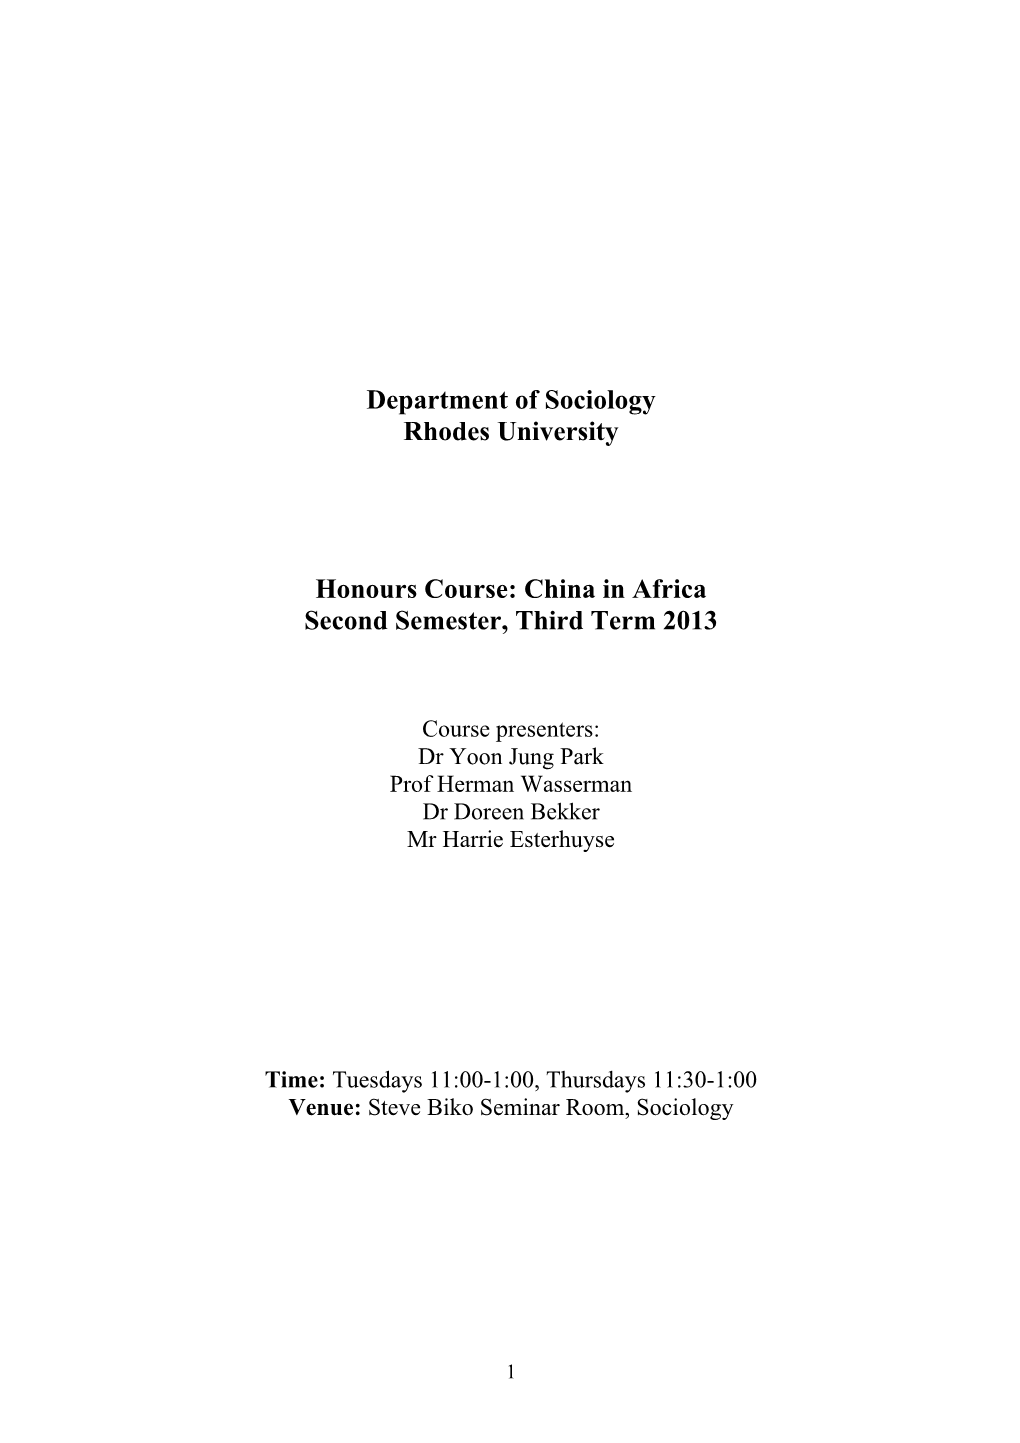 Chinese Studies: Bibliography Etc